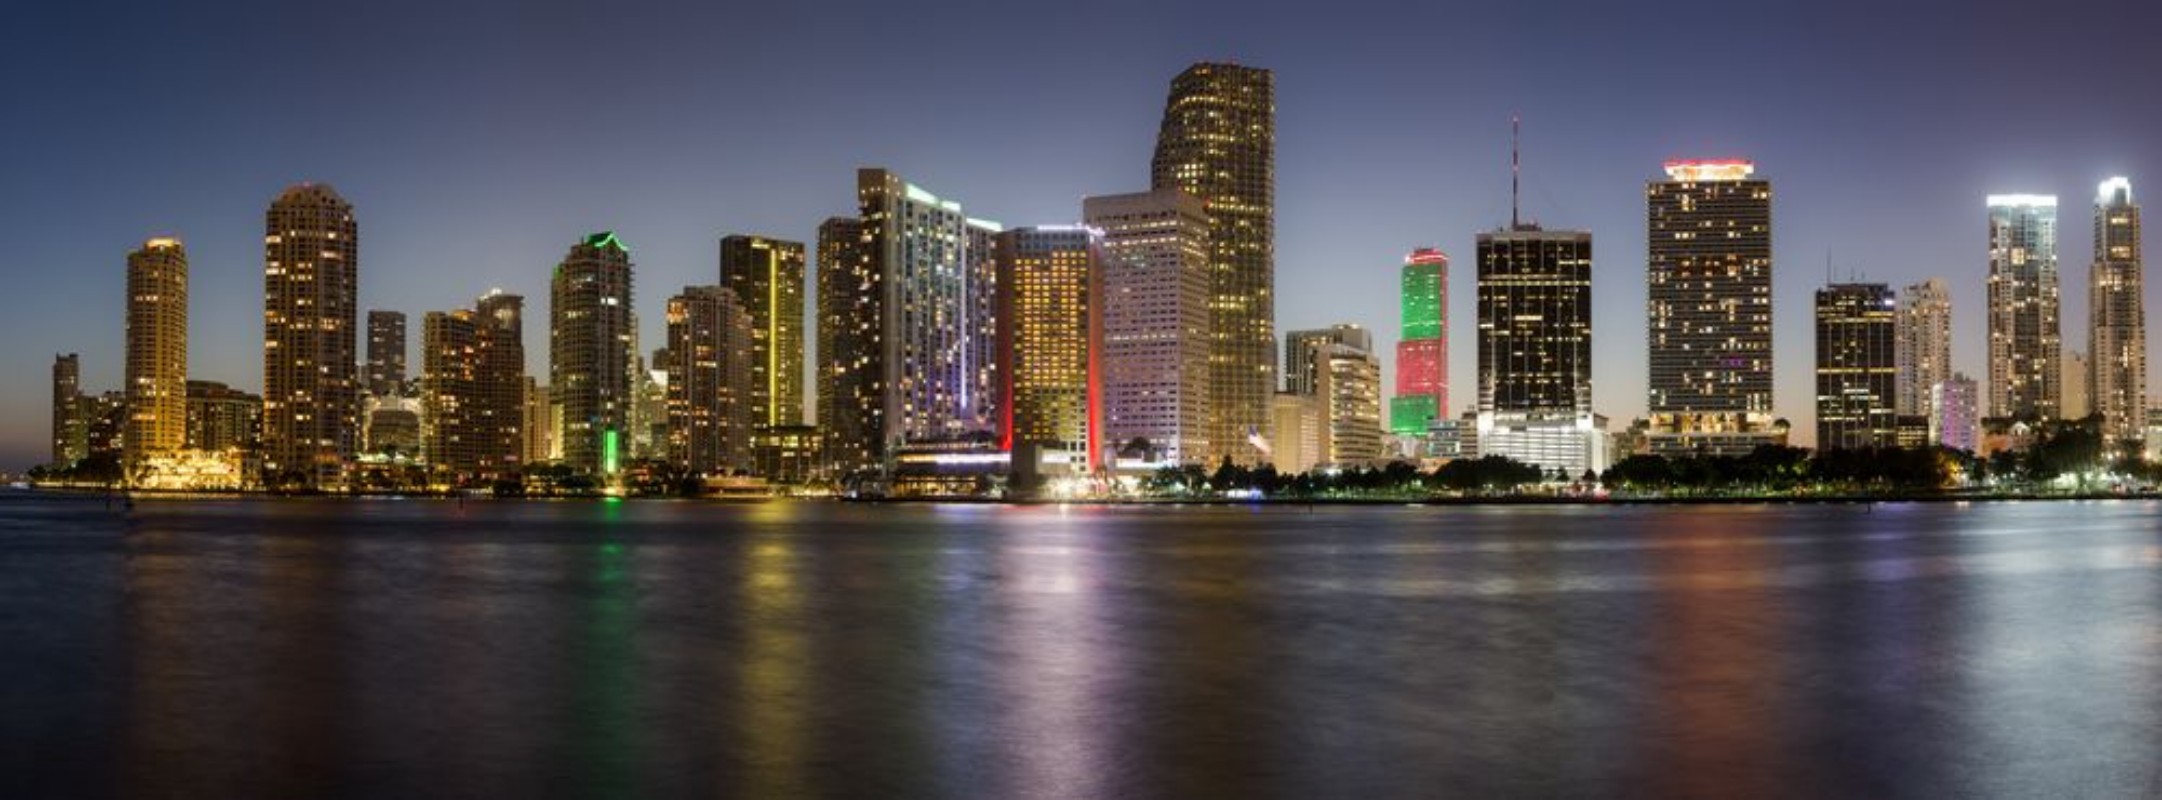 Image de Miami Florida USA downtown skyline